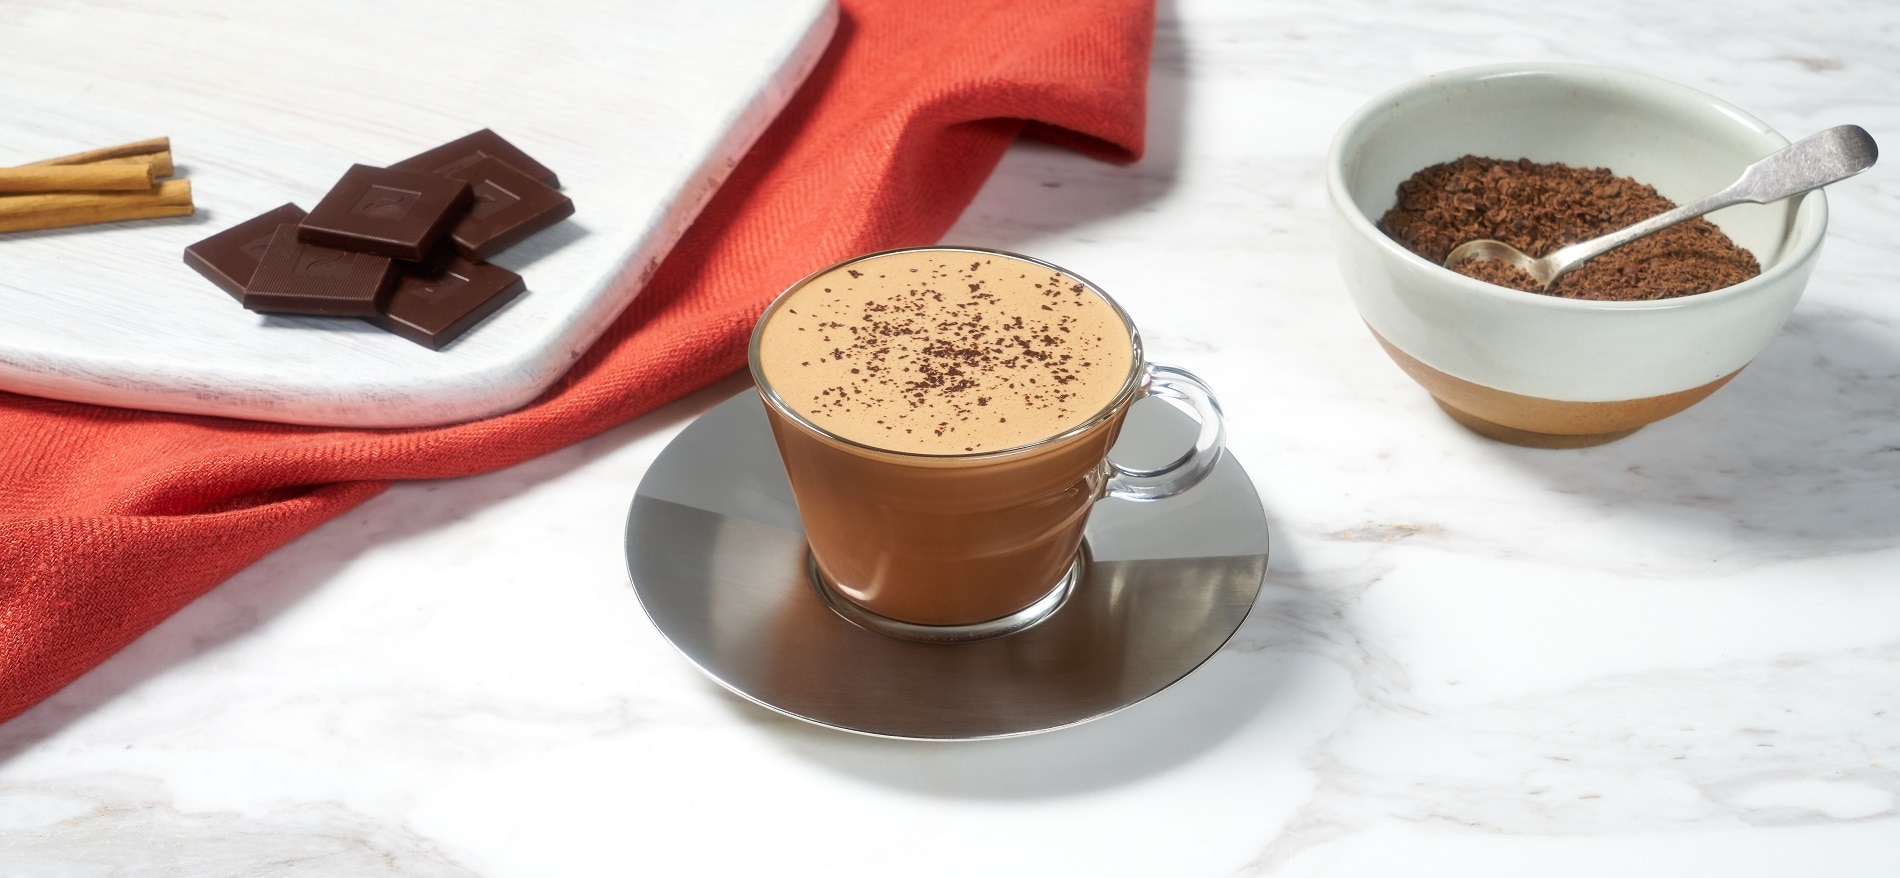 Moka chocolat café : Recette de Moka chocolat café